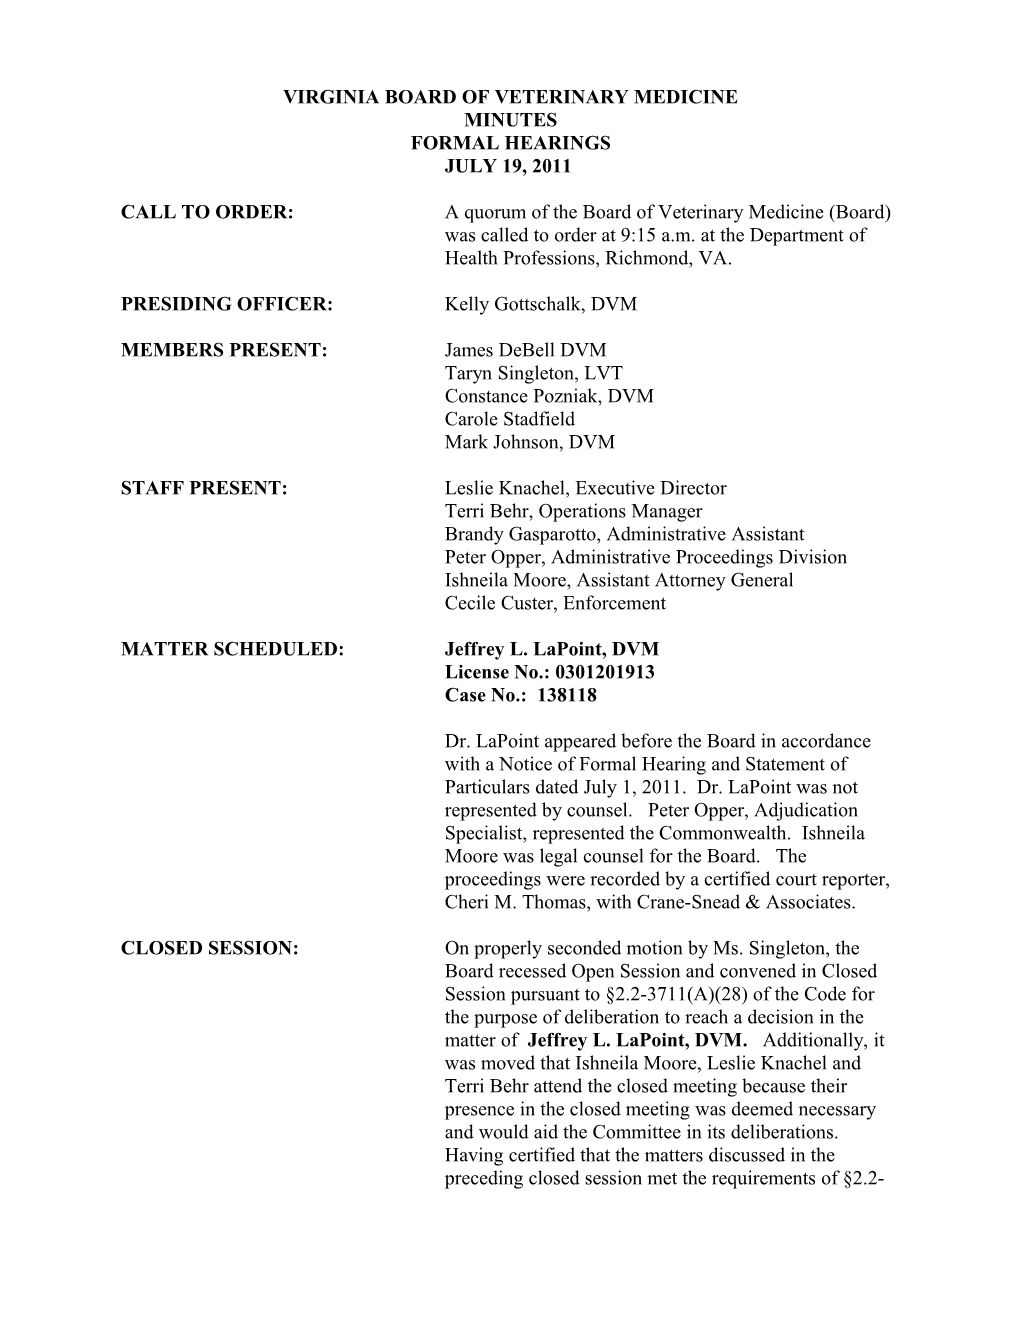 Board of Veterinary Medicine Minutes 7-19-2011